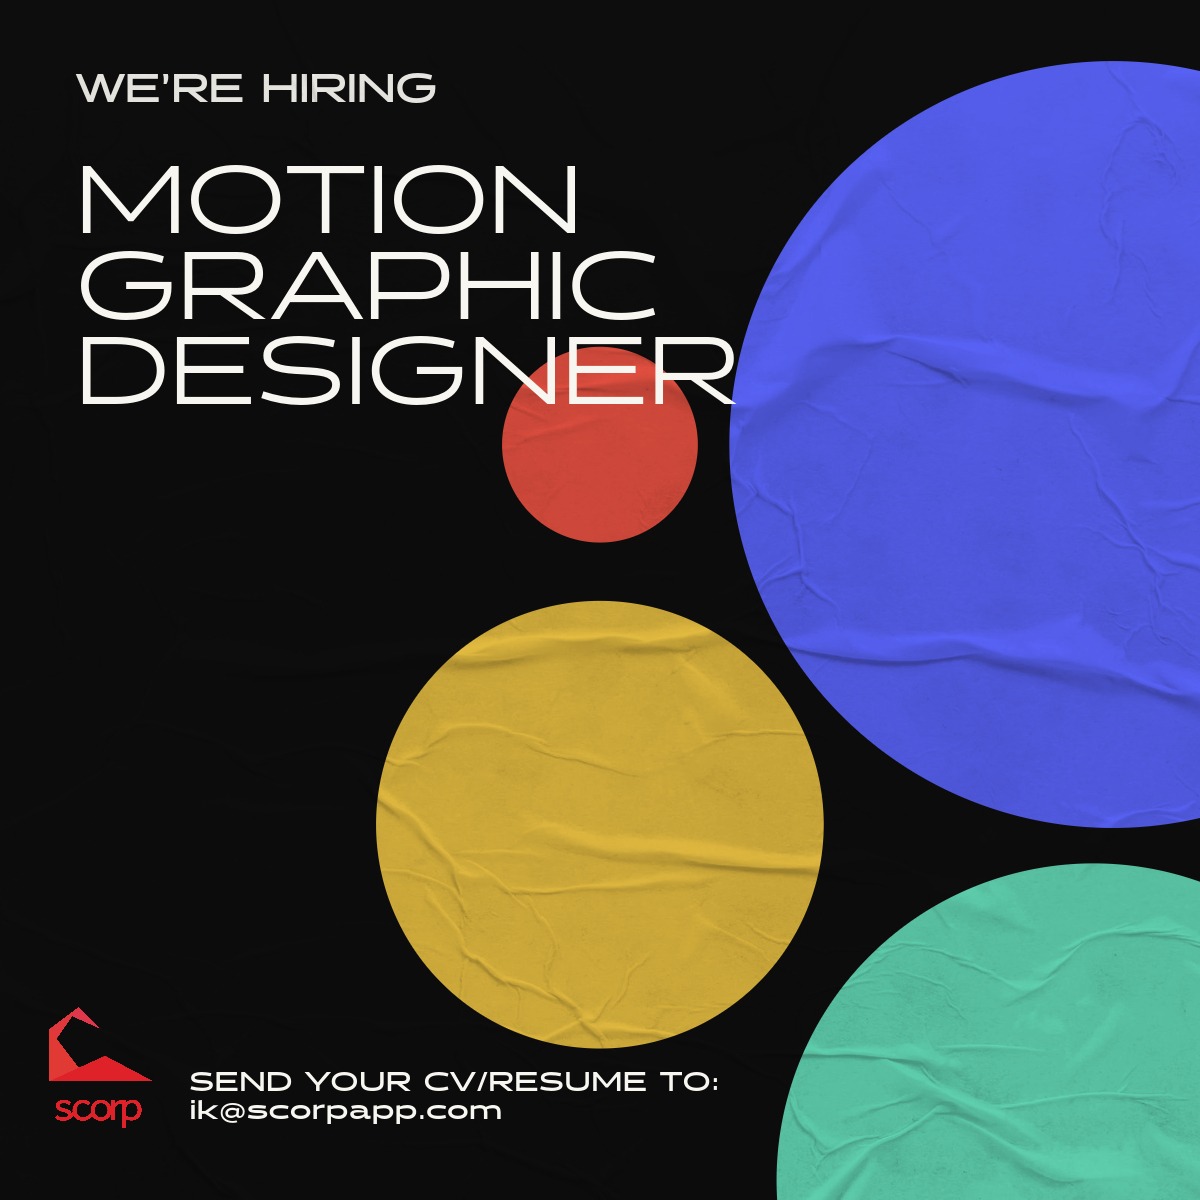 Scorp is hiring Motion Graphic Designer/ Marketing Artist!